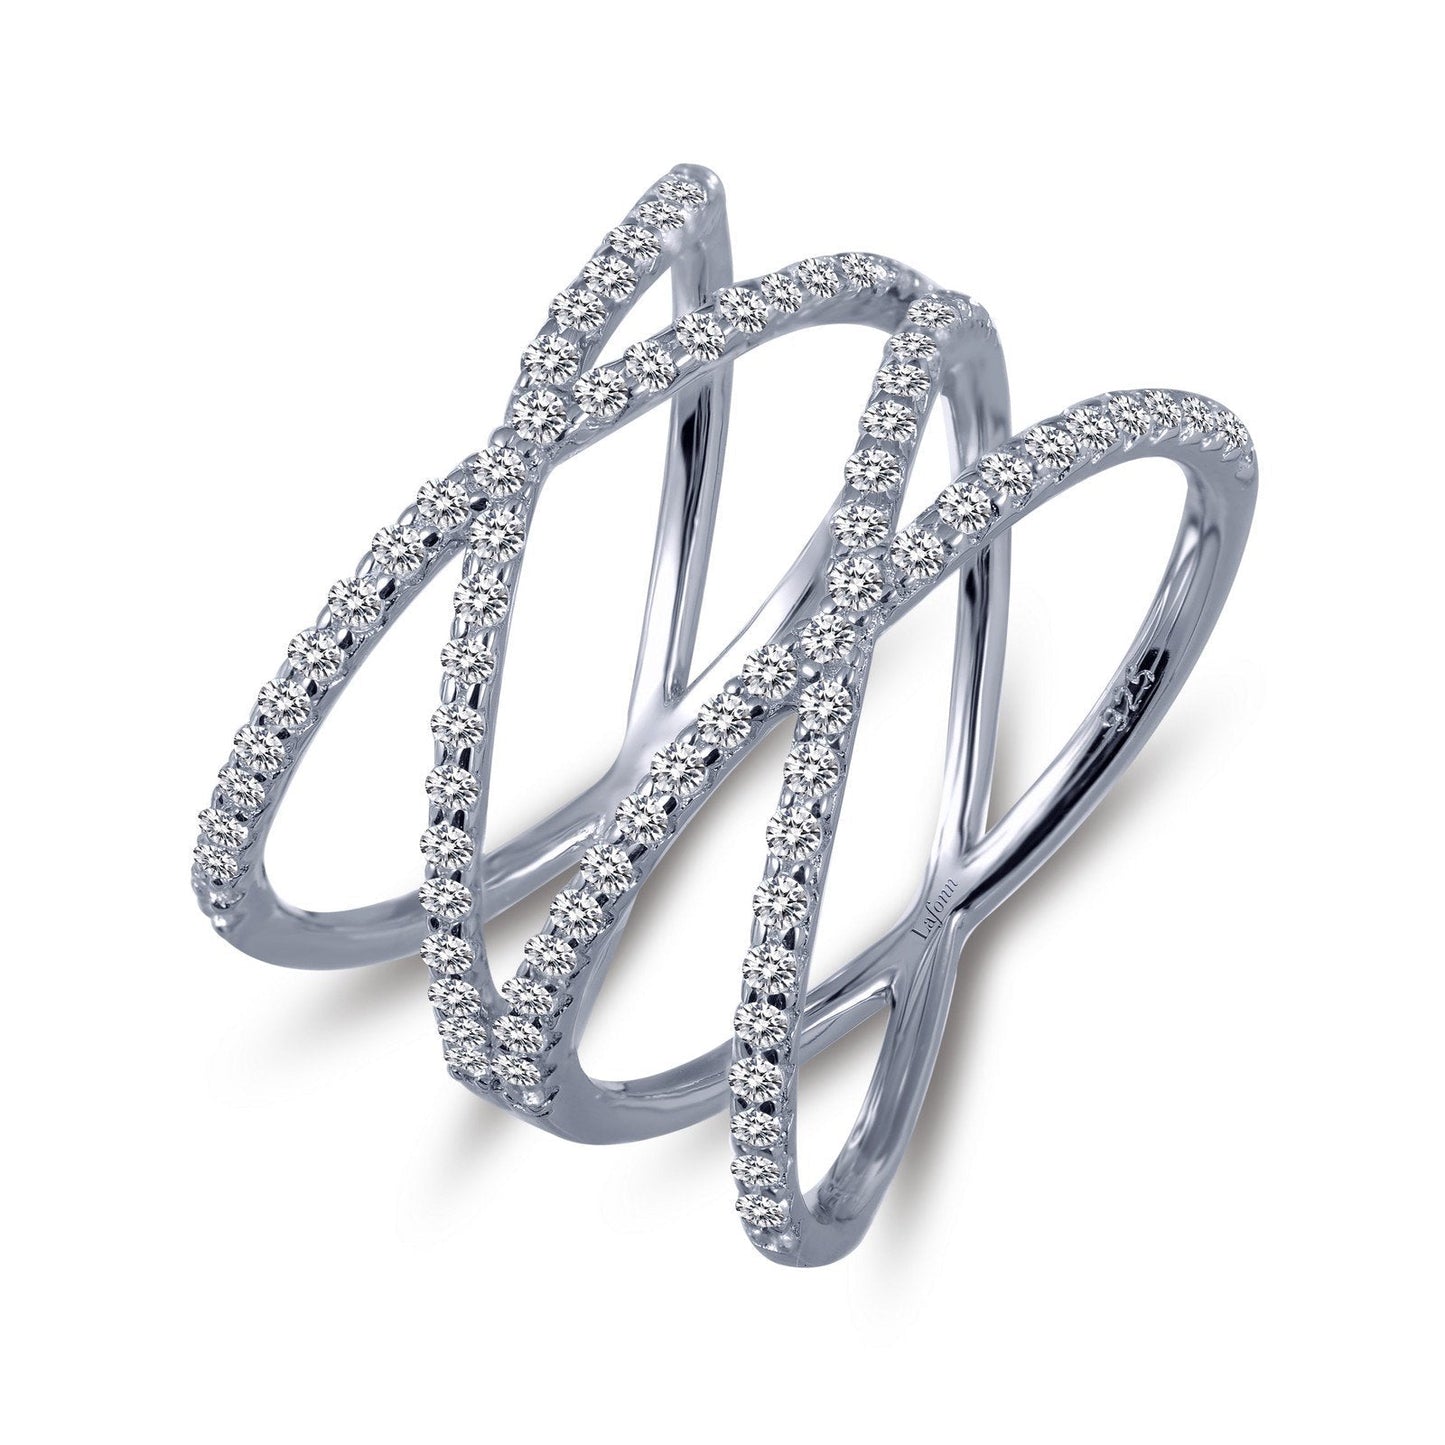 Lafonn Double Crisscross Ring Simulated Diamond RINGS Size 8 Platinum 0.92 CTS 